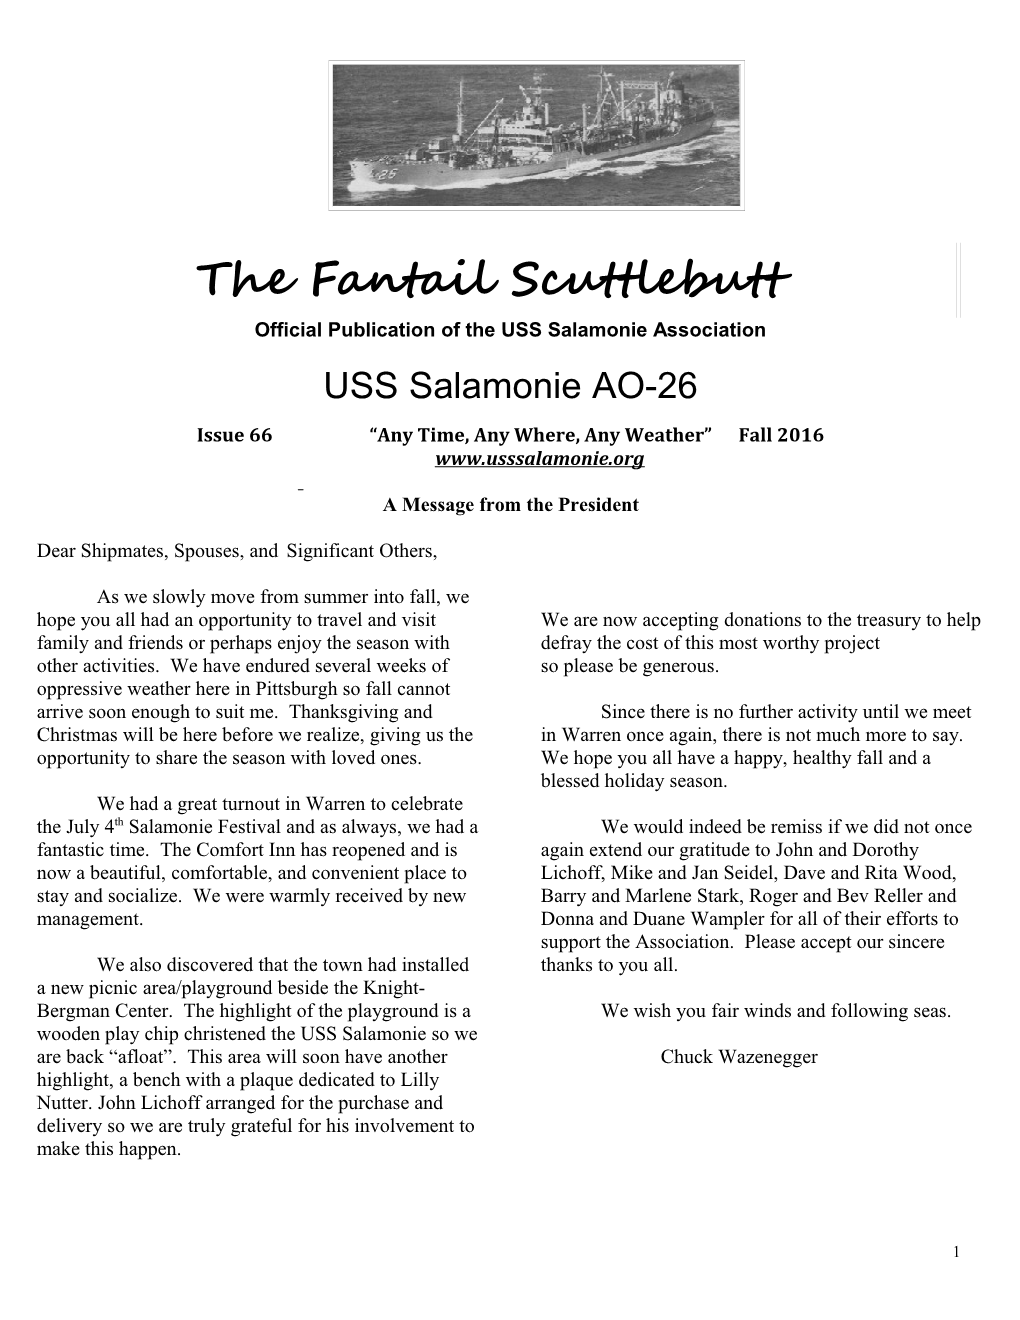 Official Publication of the USS Salamonie Association s1